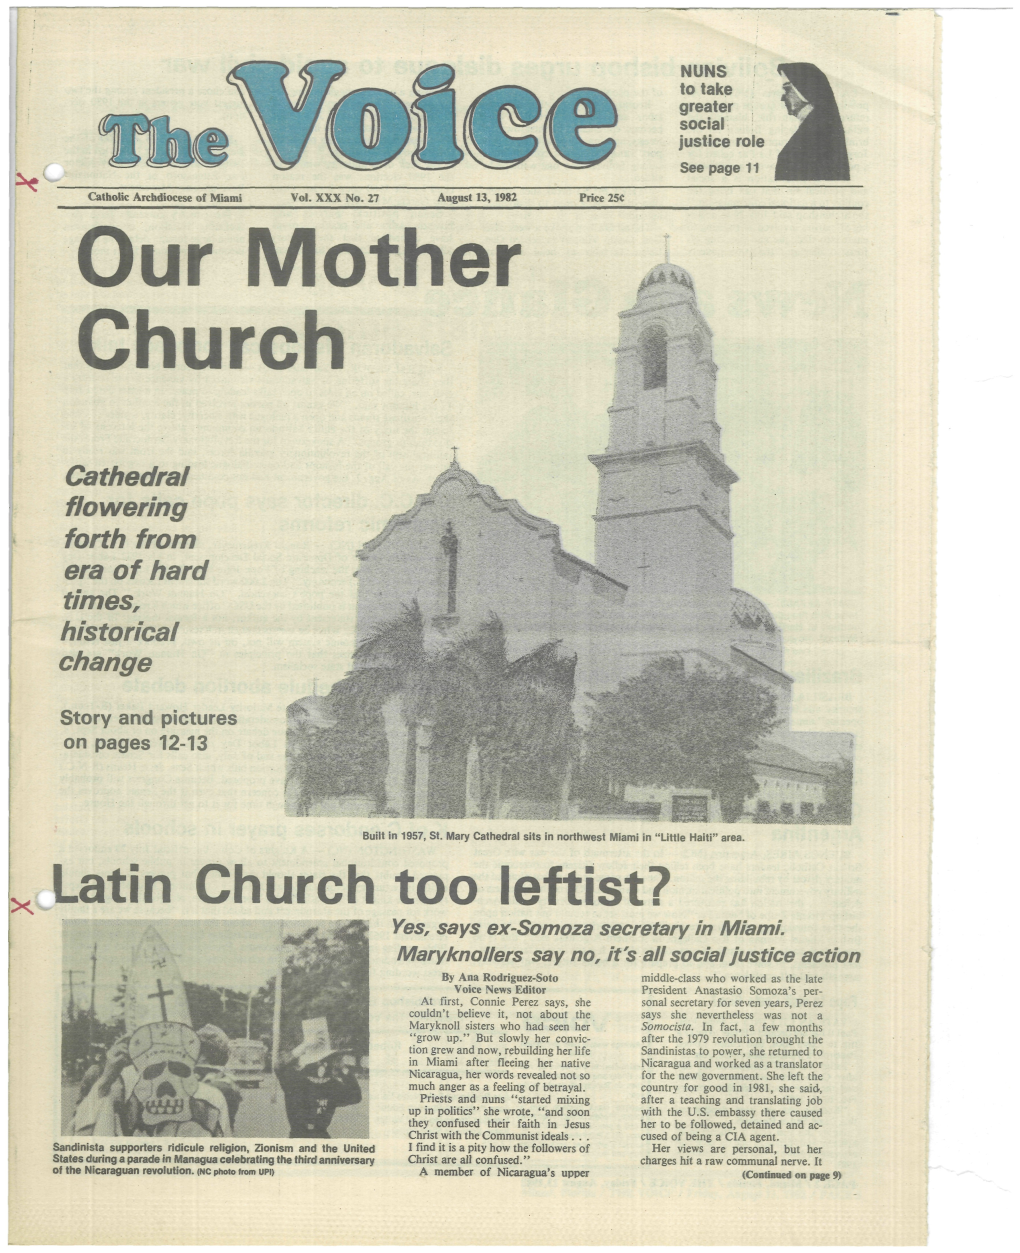 Latin Church Too Leftist? Yes, Says Ex-Somoza Secretary in Miami